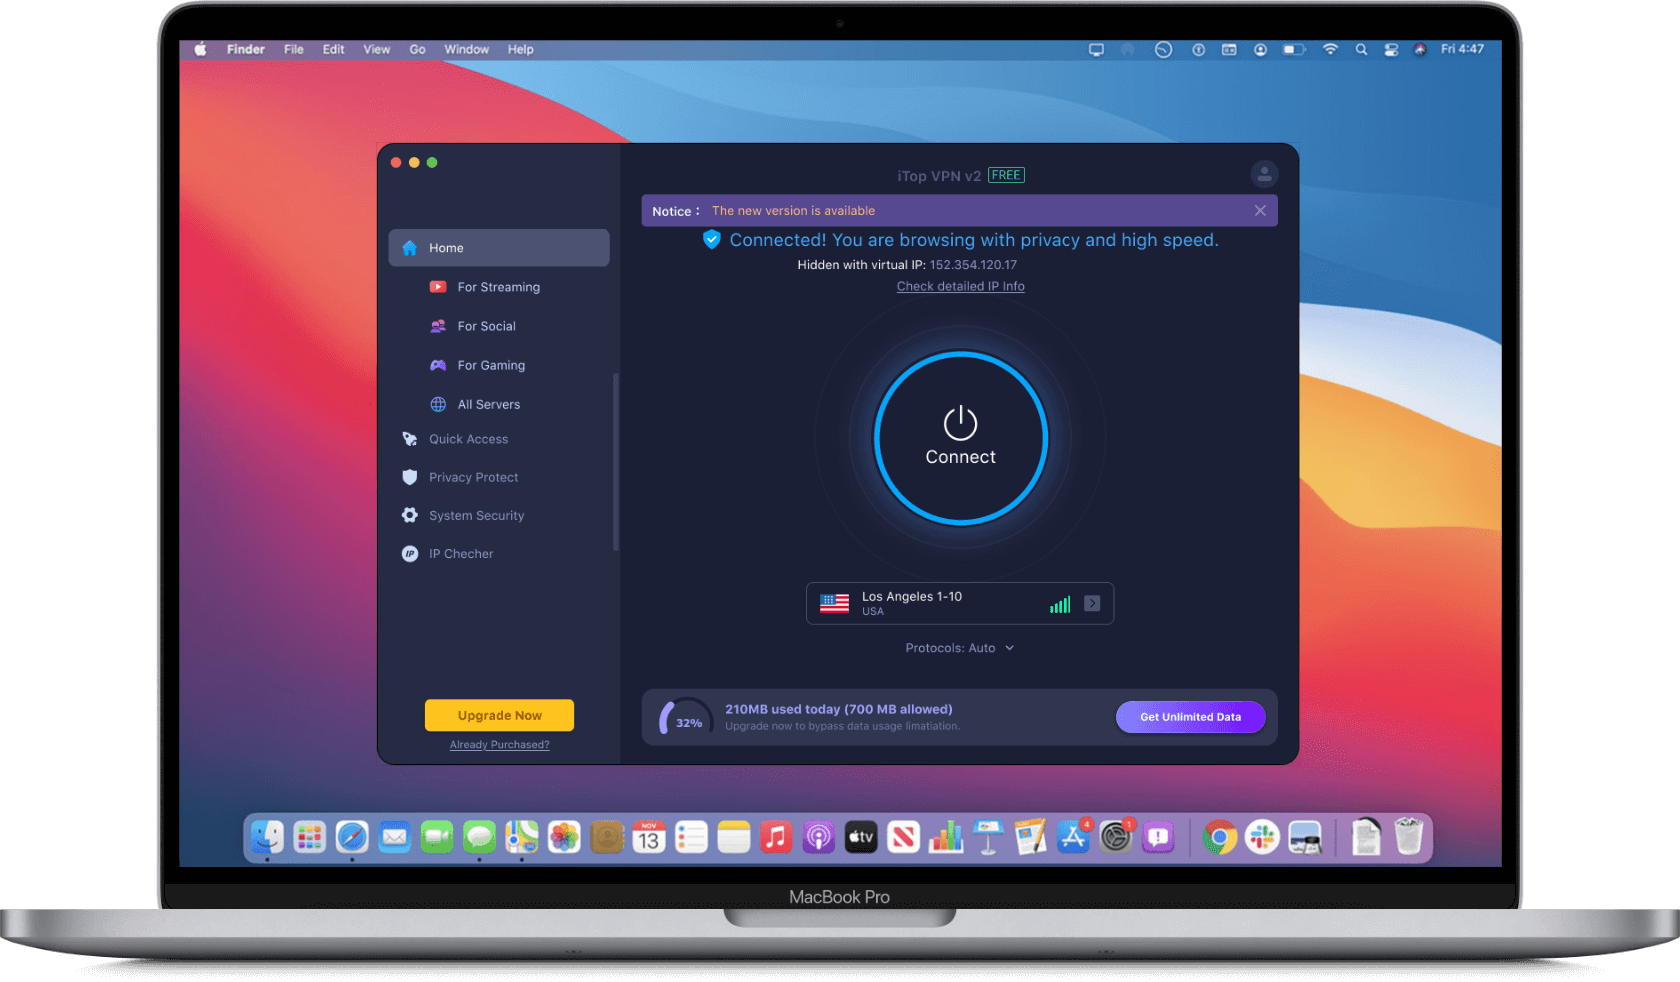 The Best Free VPN for Mac - iTop VPN